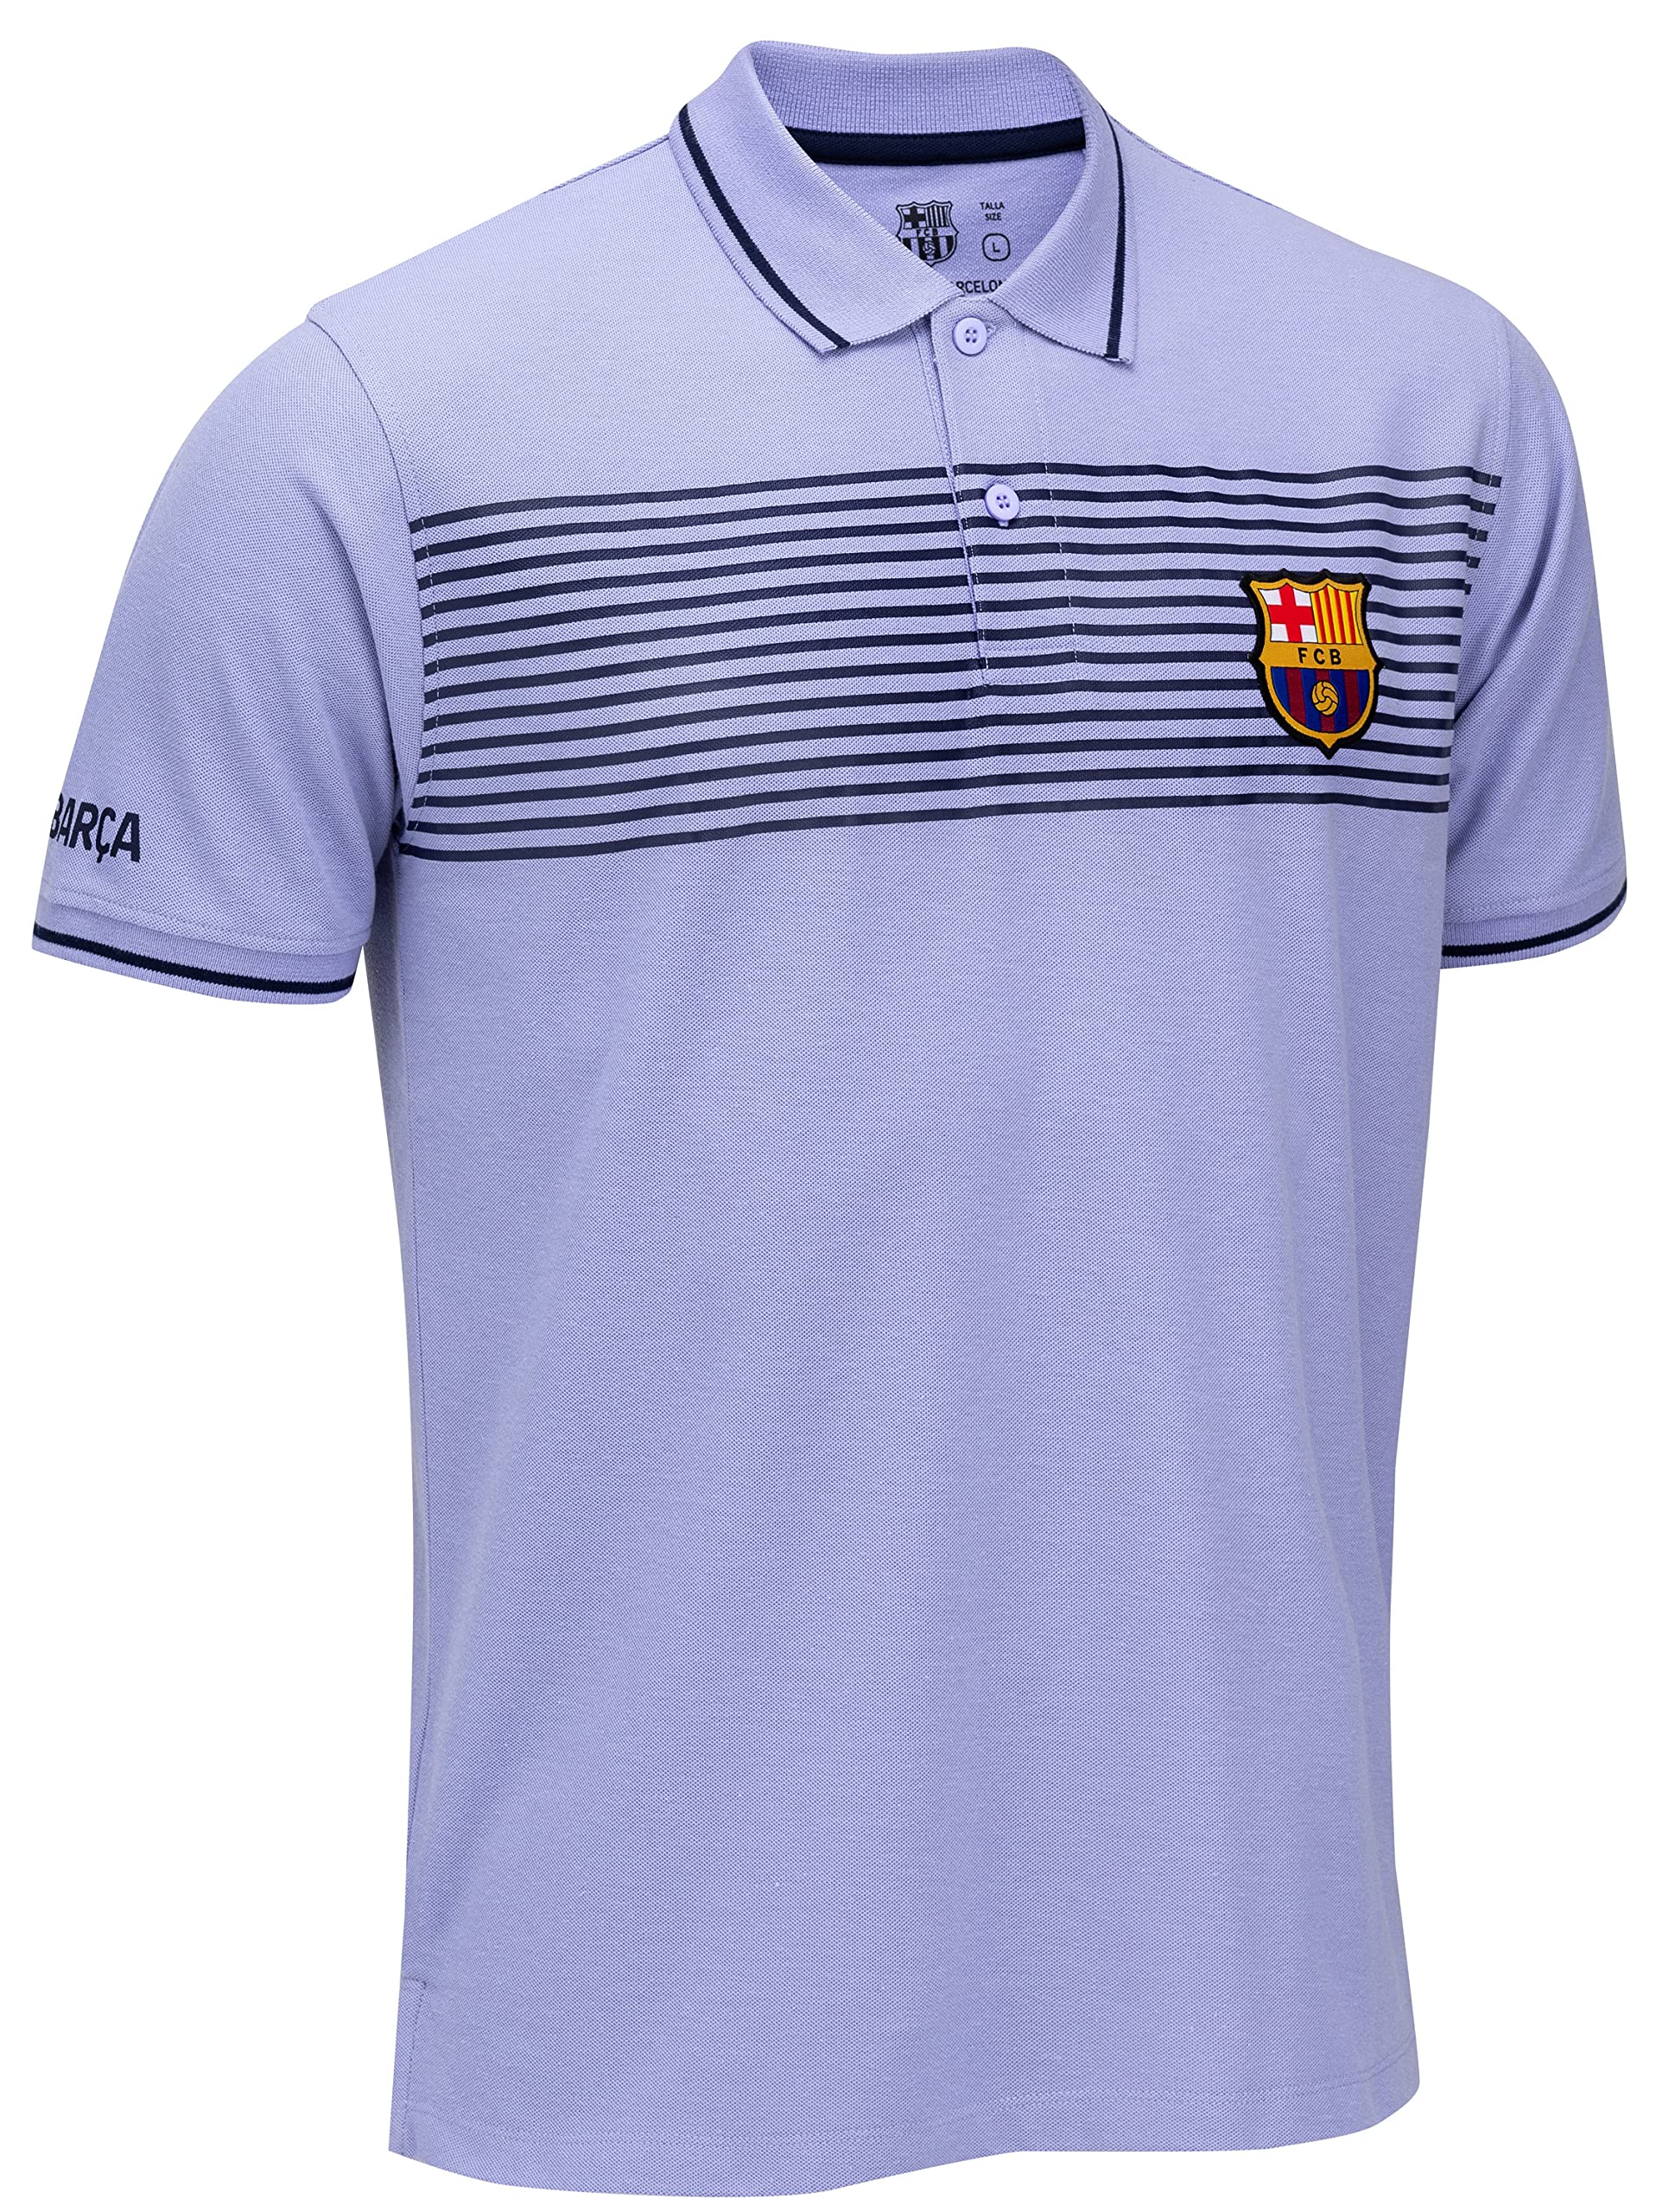 Polo-Shirt Barça, offizielle FC Barcelona, für Herren, Größe L